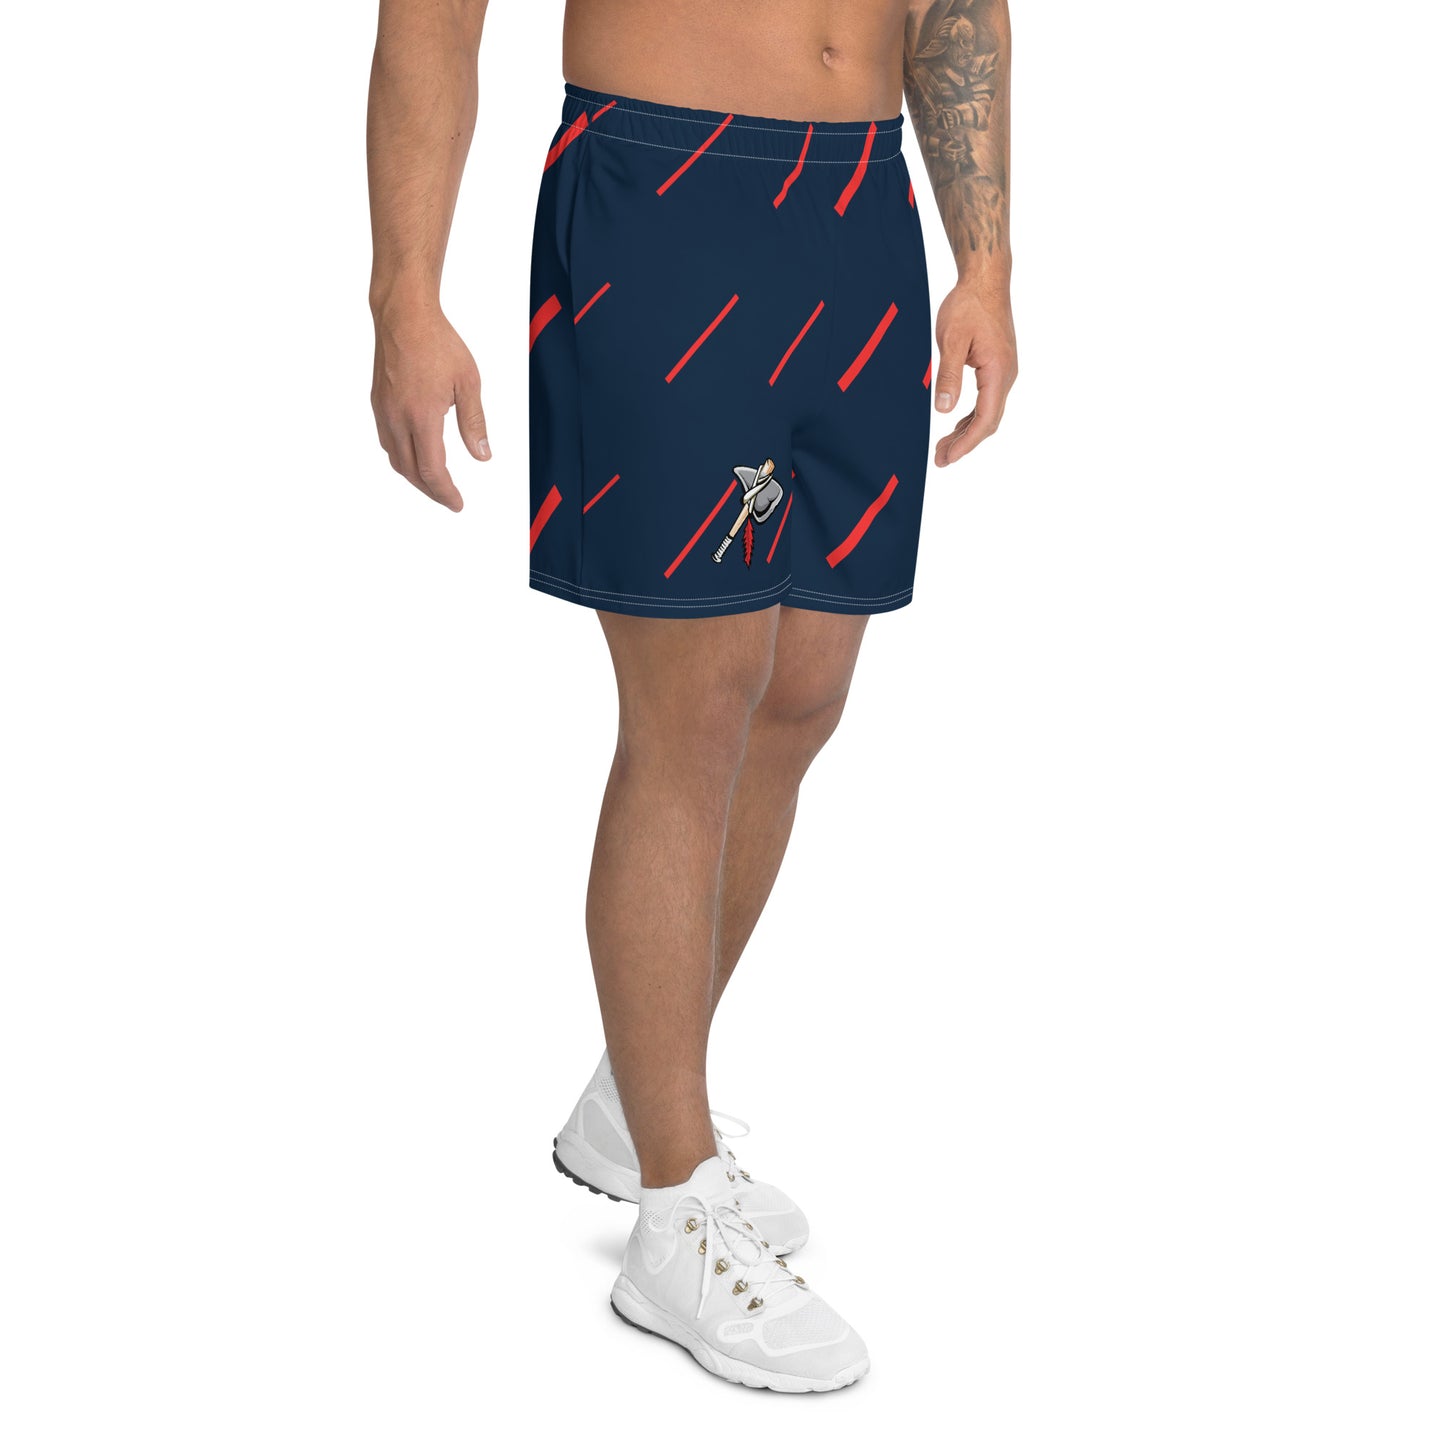 LOL Tomahawks Streaks Men's Athletic Shorts